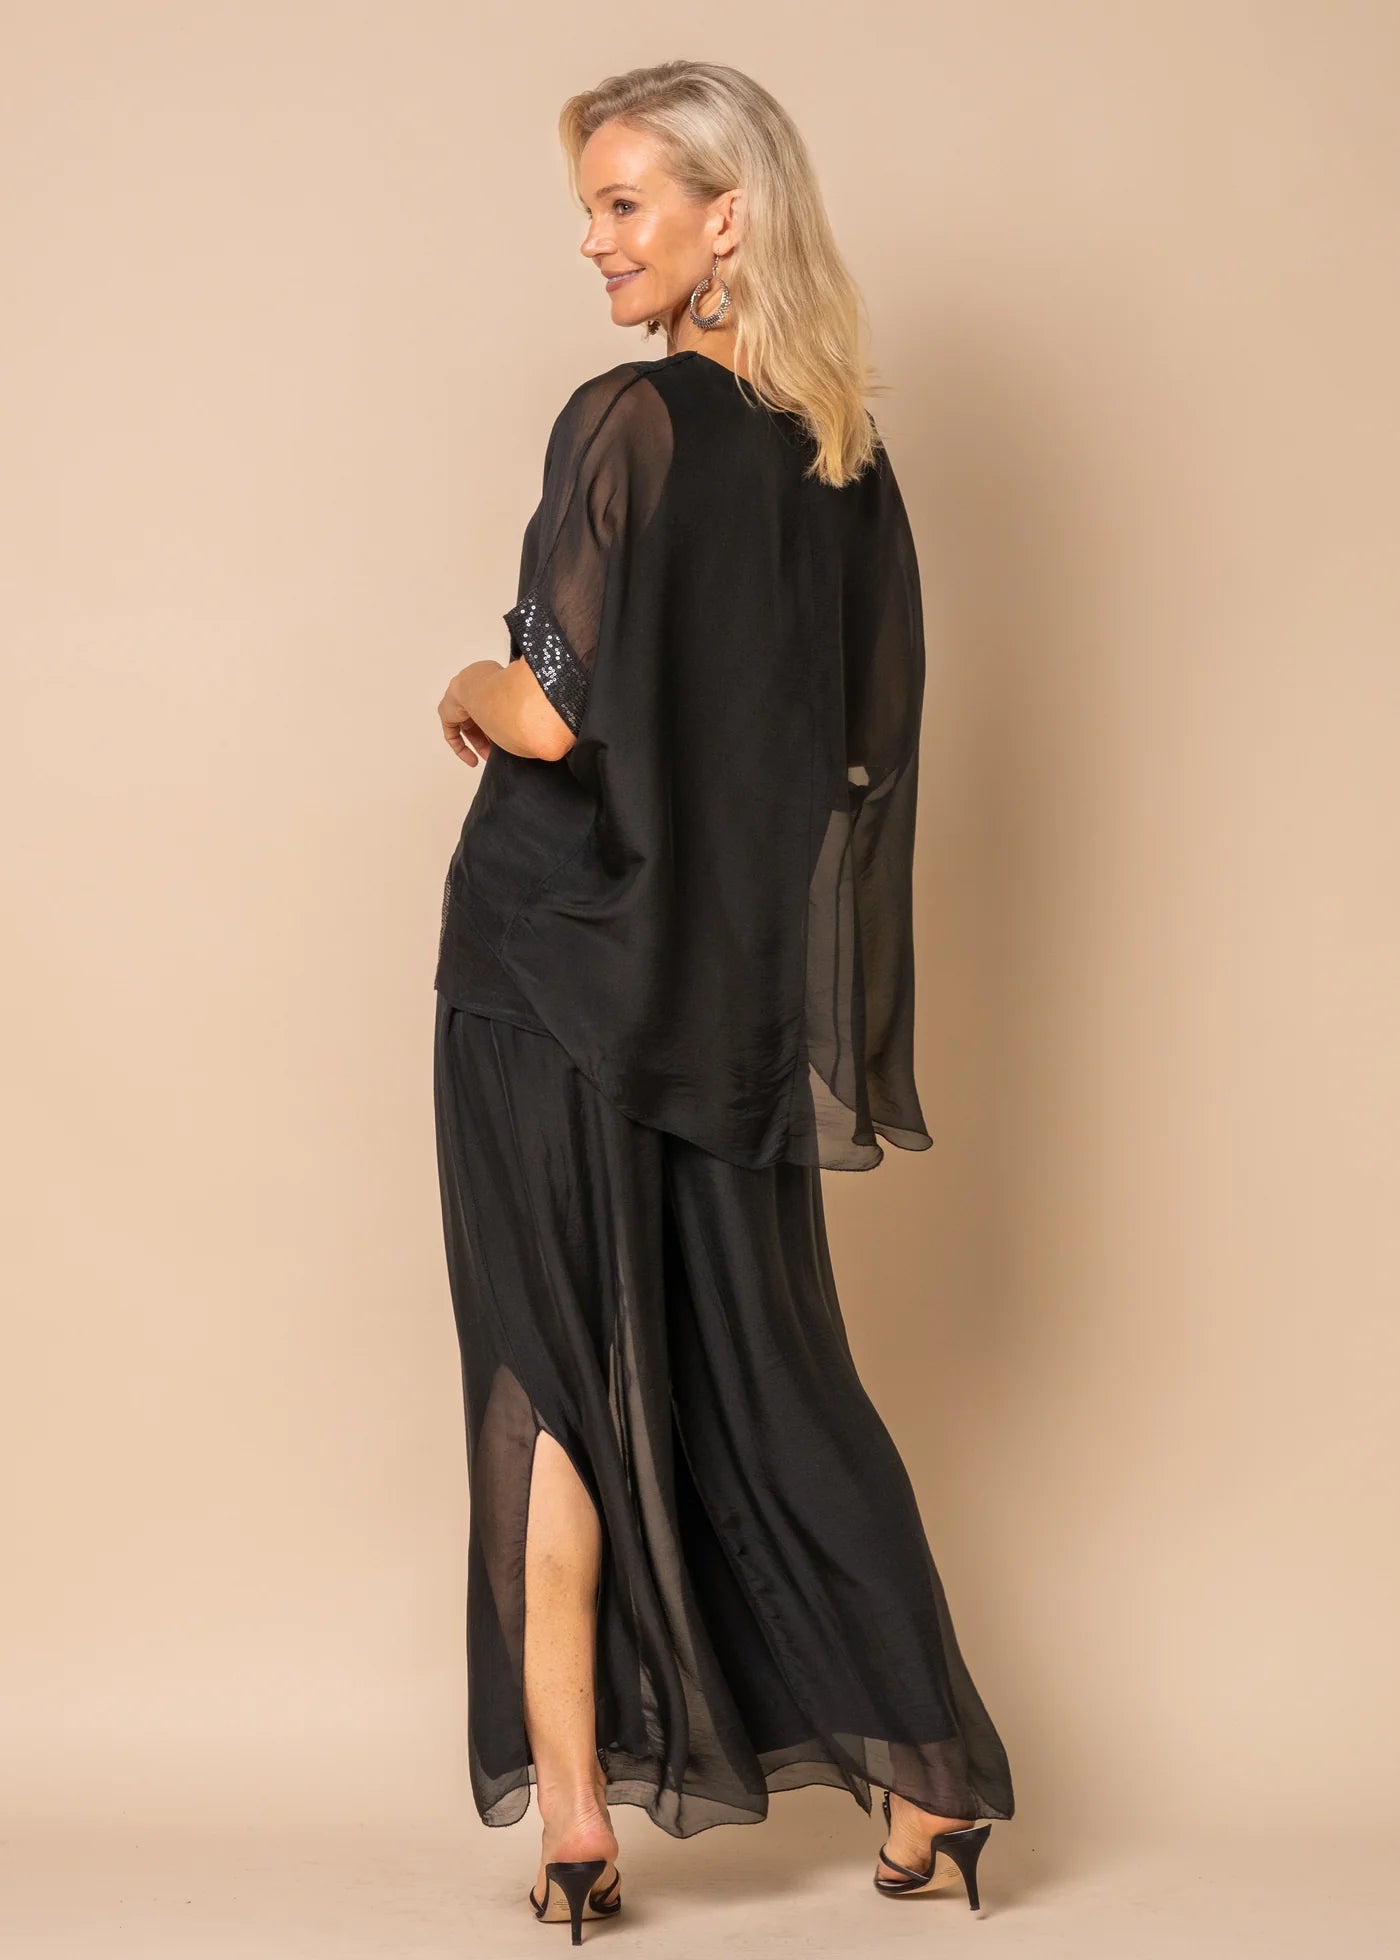 Mimi Silk Top in Onyx - Pinkhill, Darwin boutique, Australian high end fashion, Darwin Fashion